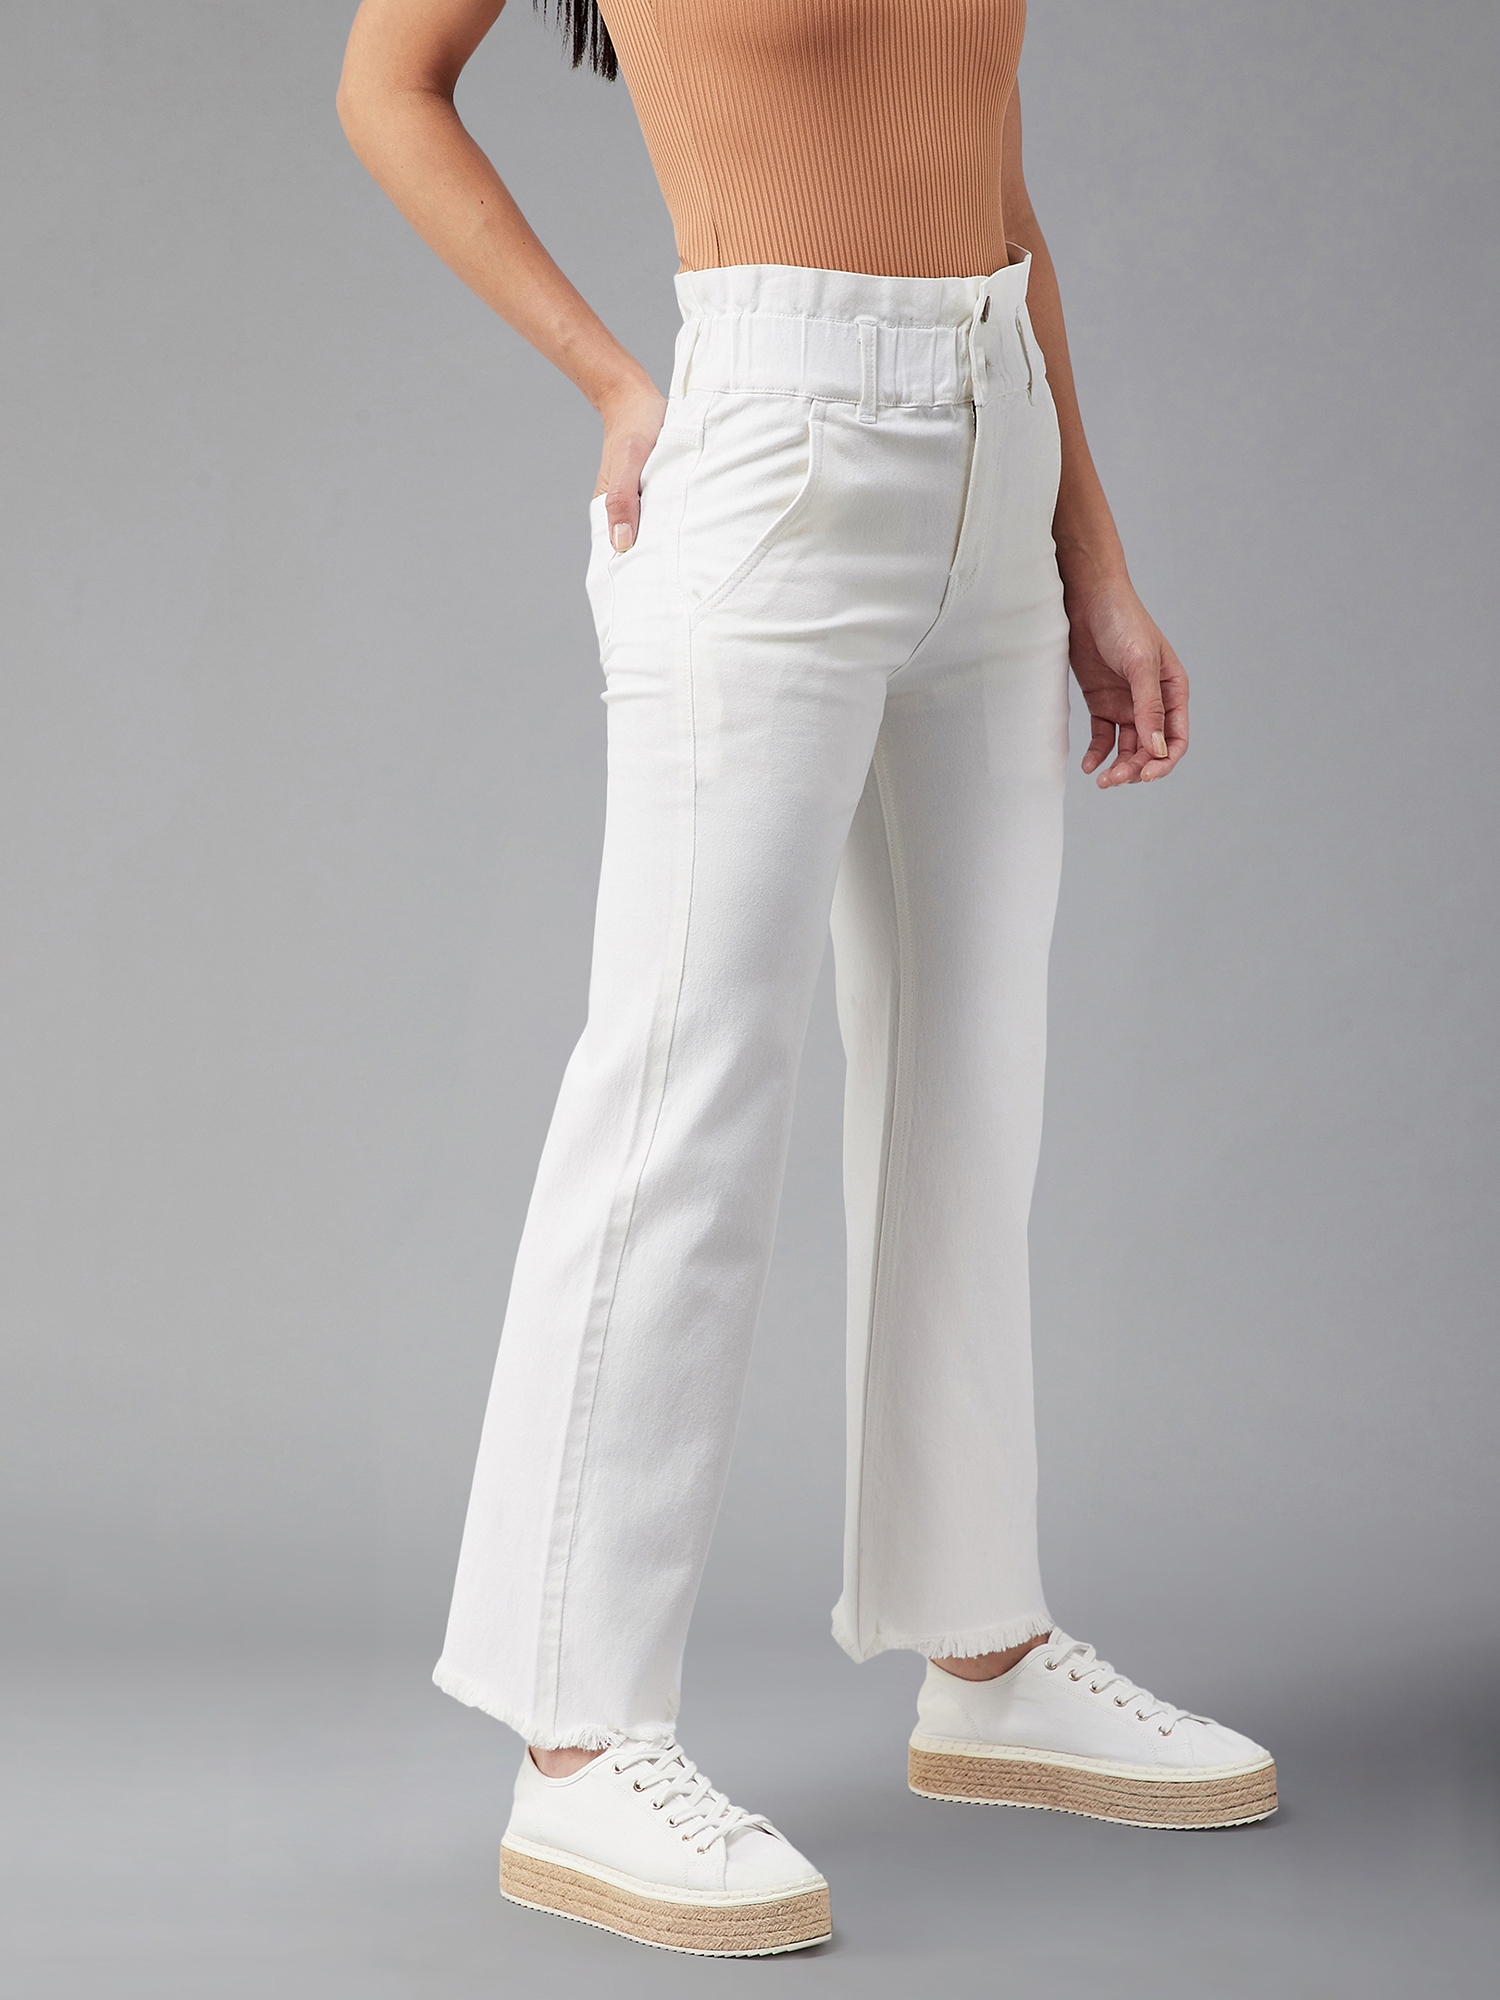 ALAÏA Women's High Waist White Denim Jeans | ALAÏA US